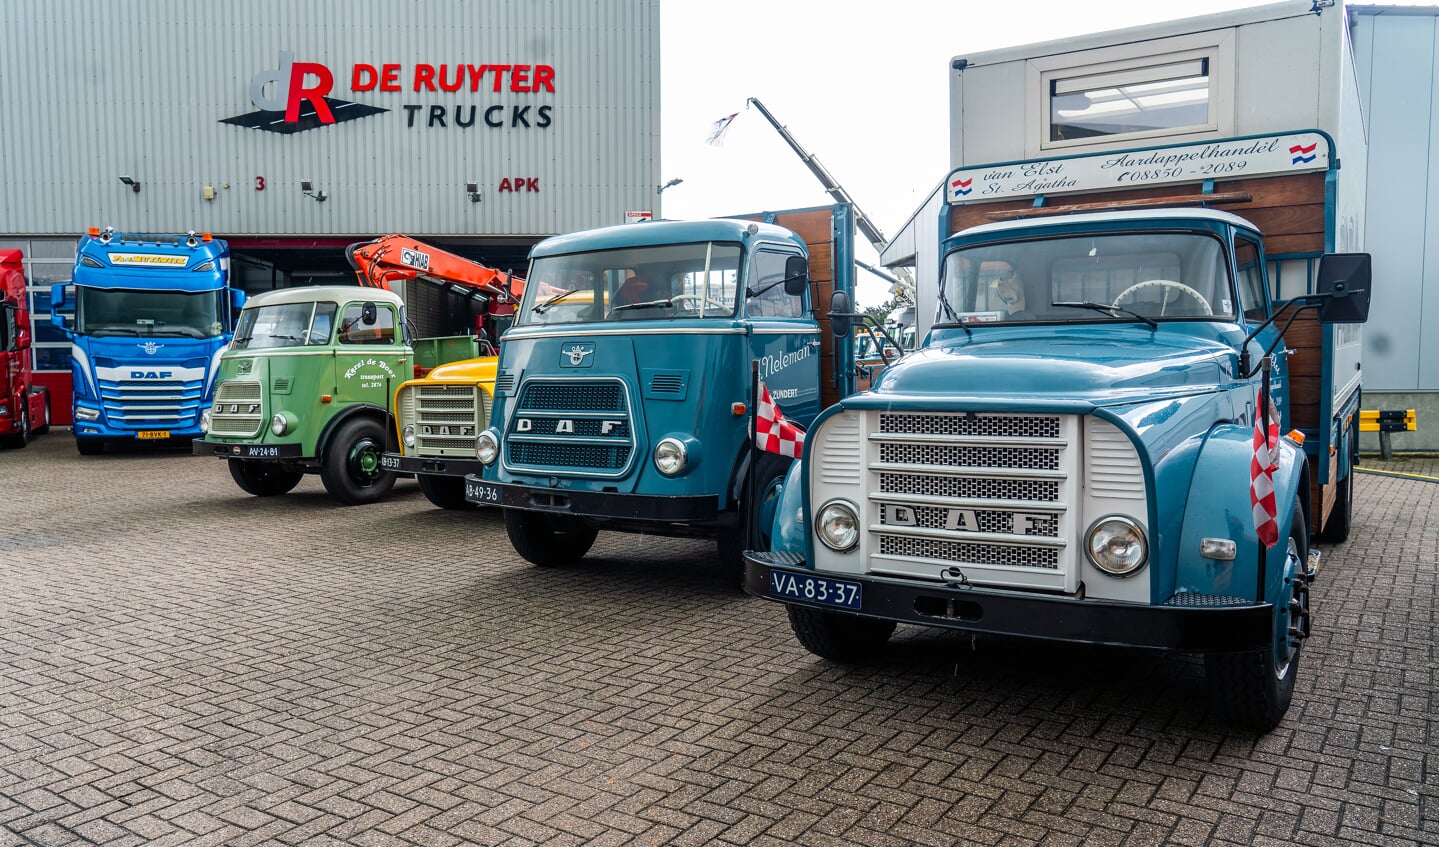 100 Jaar de Ruyter Trucks